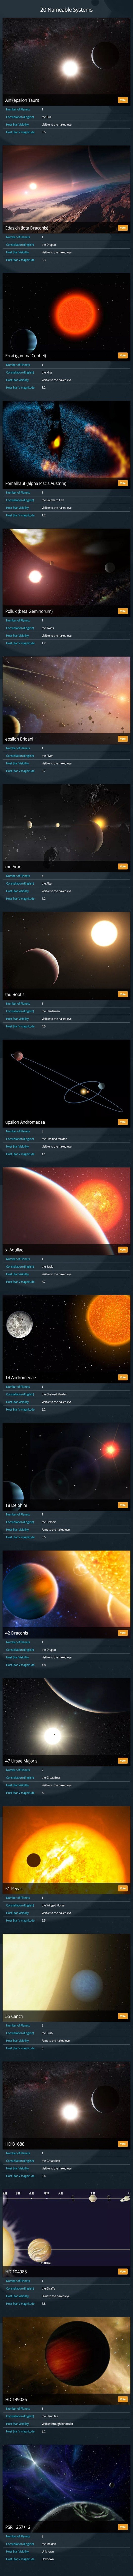 International Astronomical Union website screenshot for tablet version 1 of 2